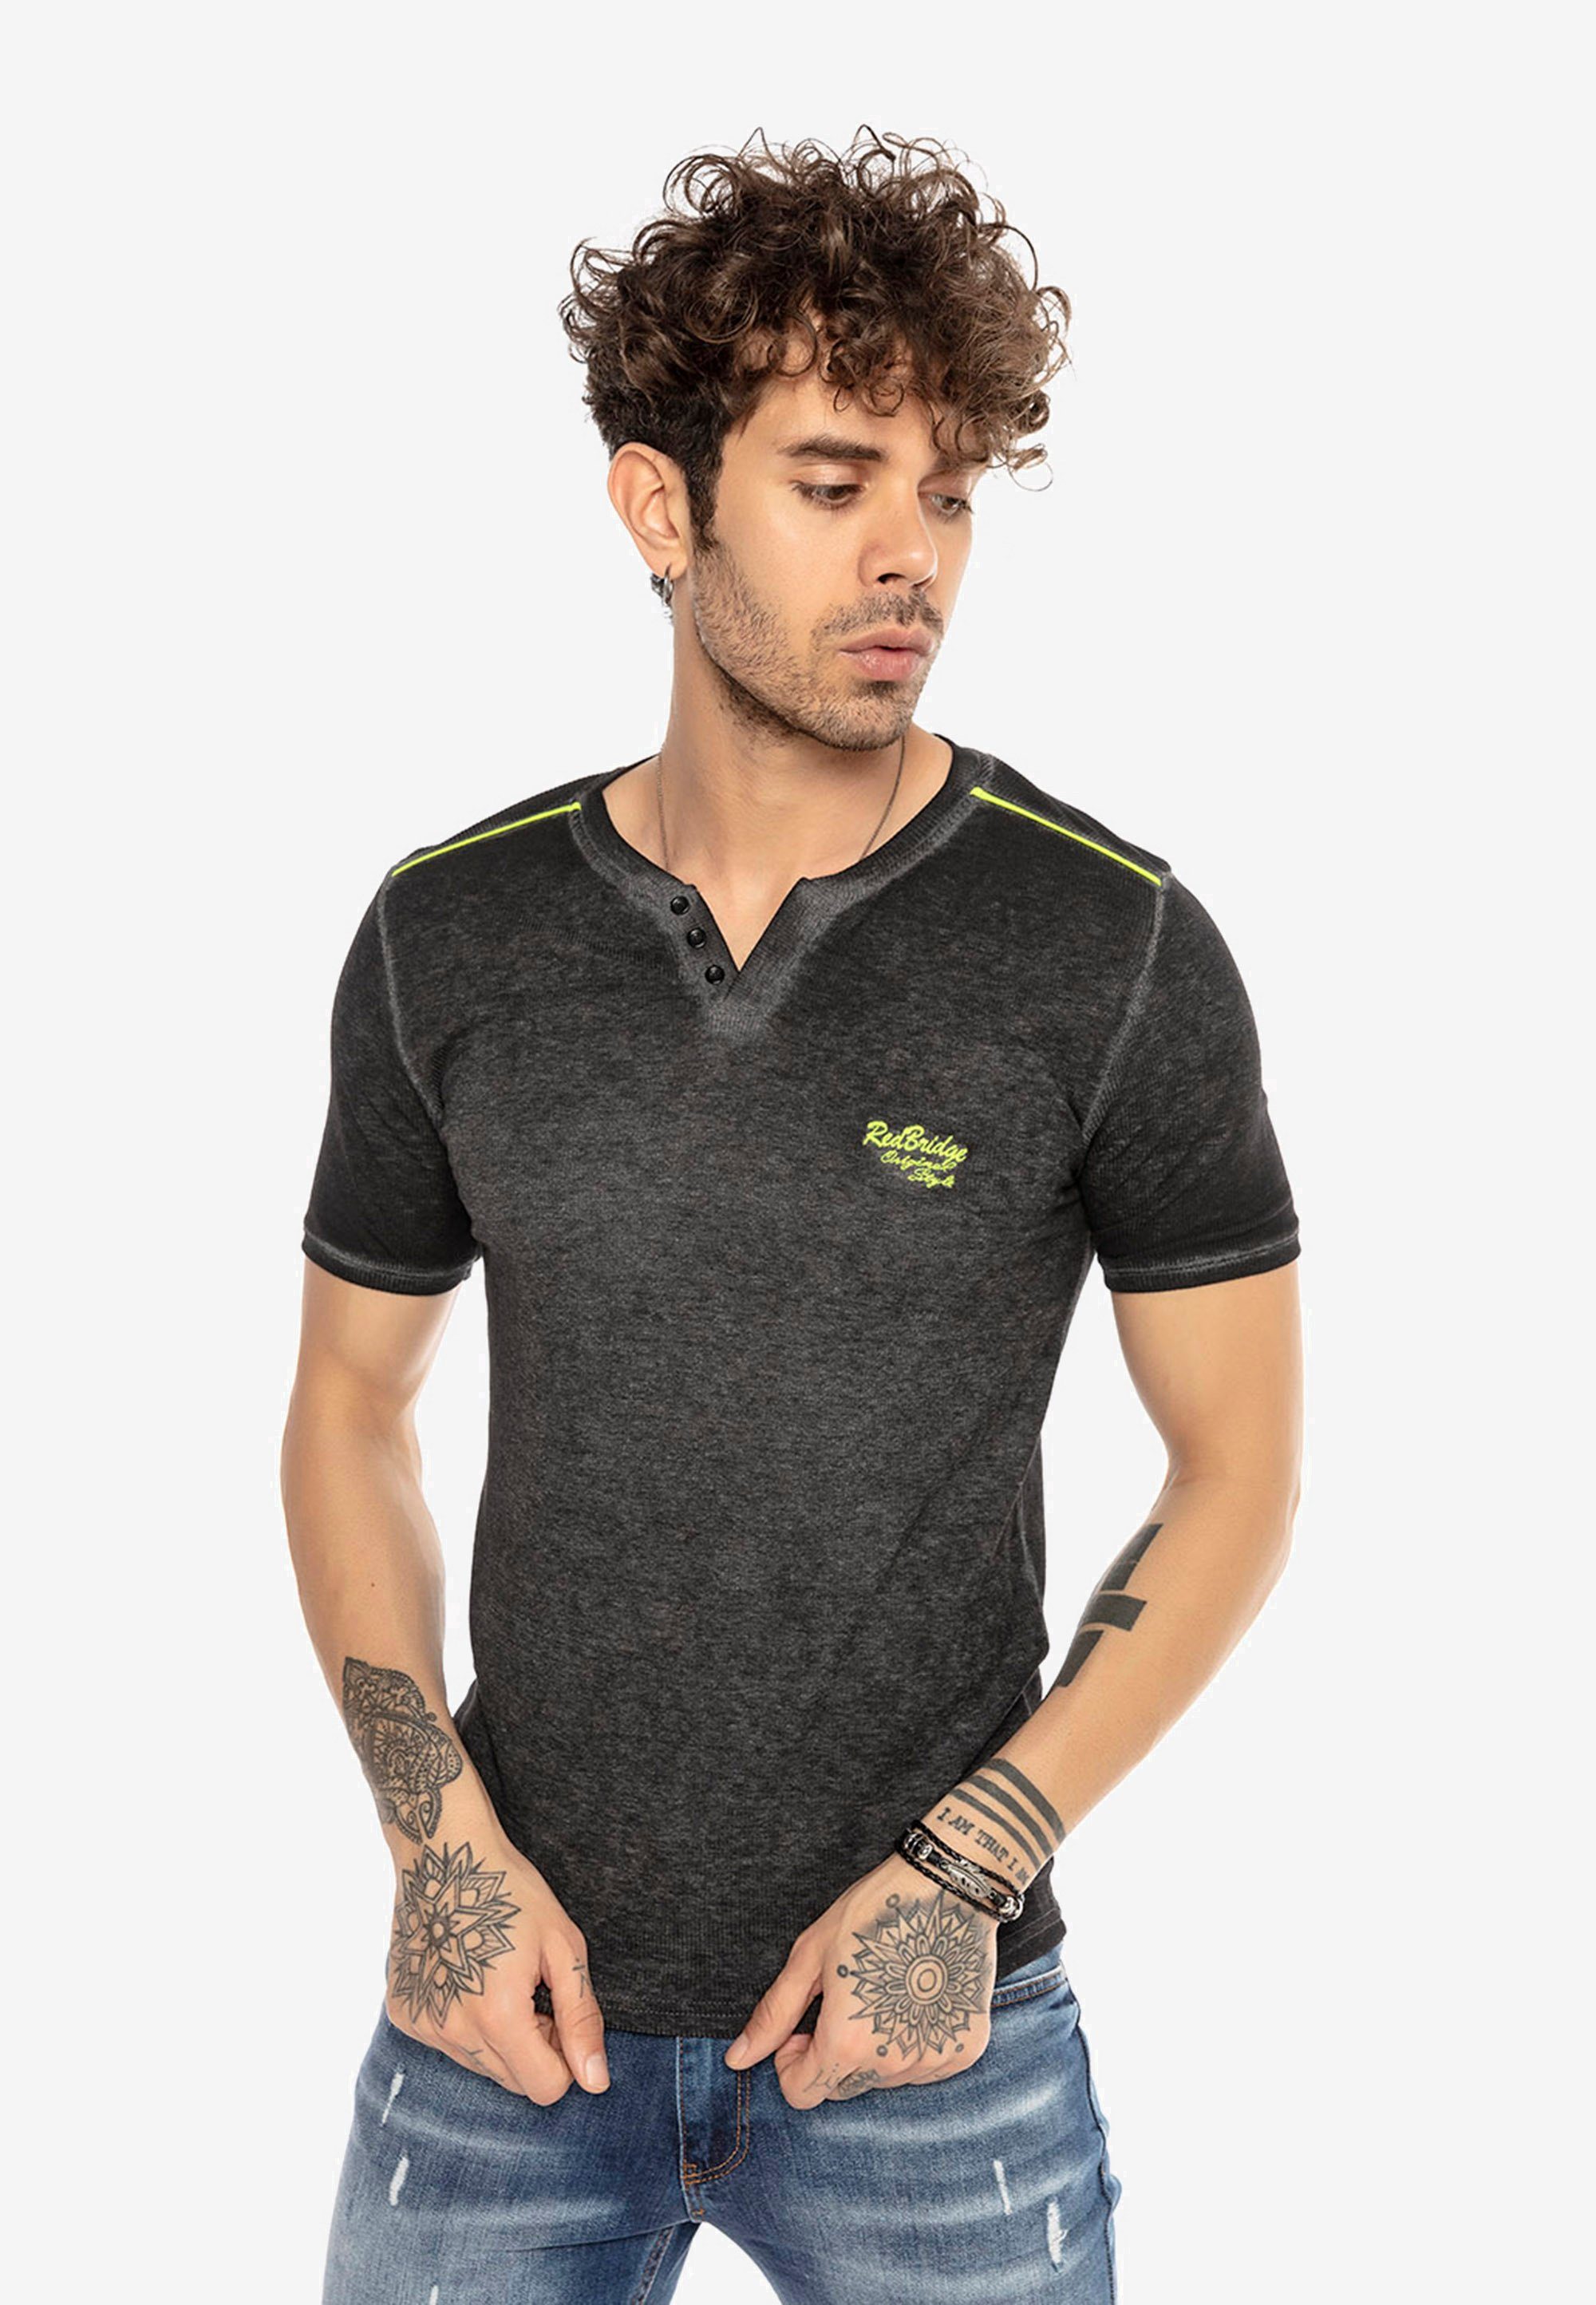 RedBridge T-Shirt Clarksville mit Neon V-Ausschnitt mit melliert dunkelgrau